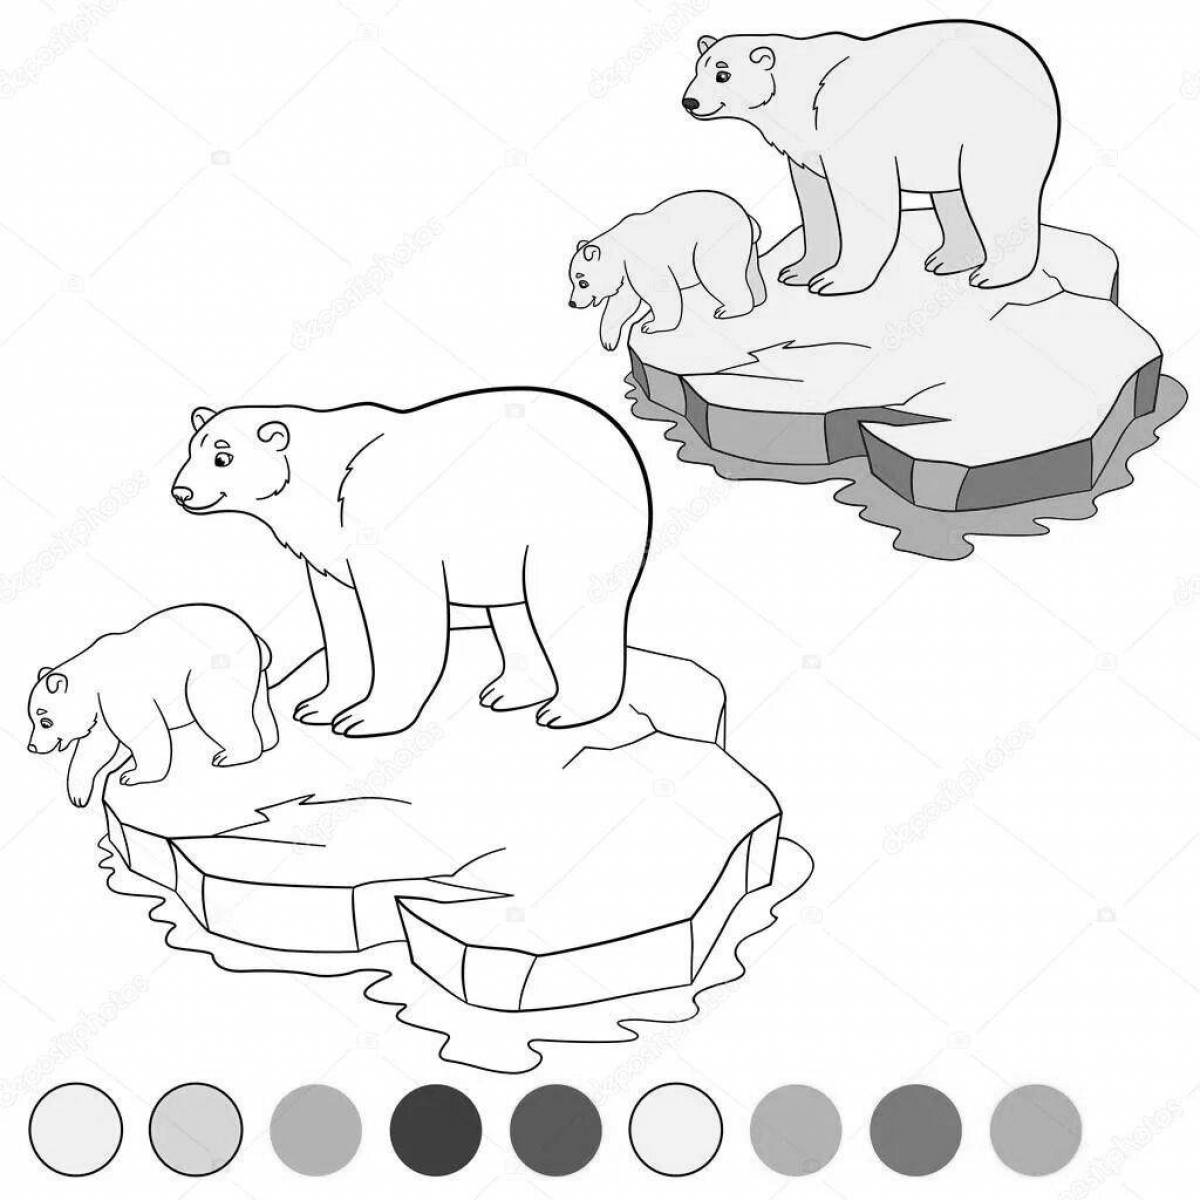 Animated drawing of a polar bear